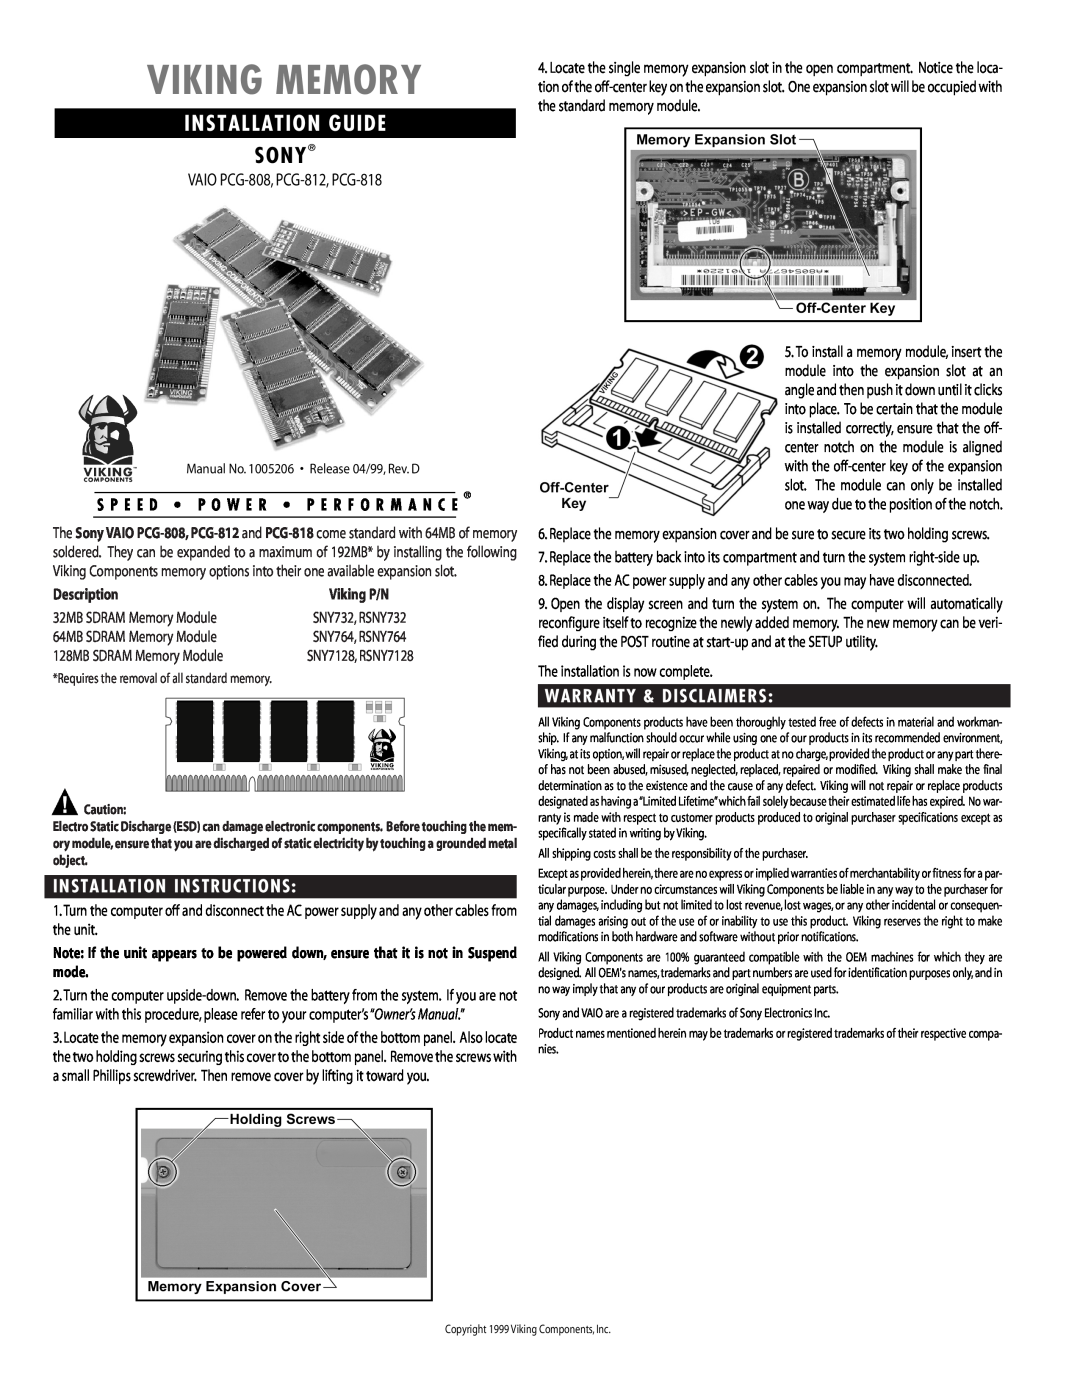 Vizio installation instructions Viking Memory, Installation Guide, Sony, VAIO PCG-808, PCG-812, PCG-818, Description 